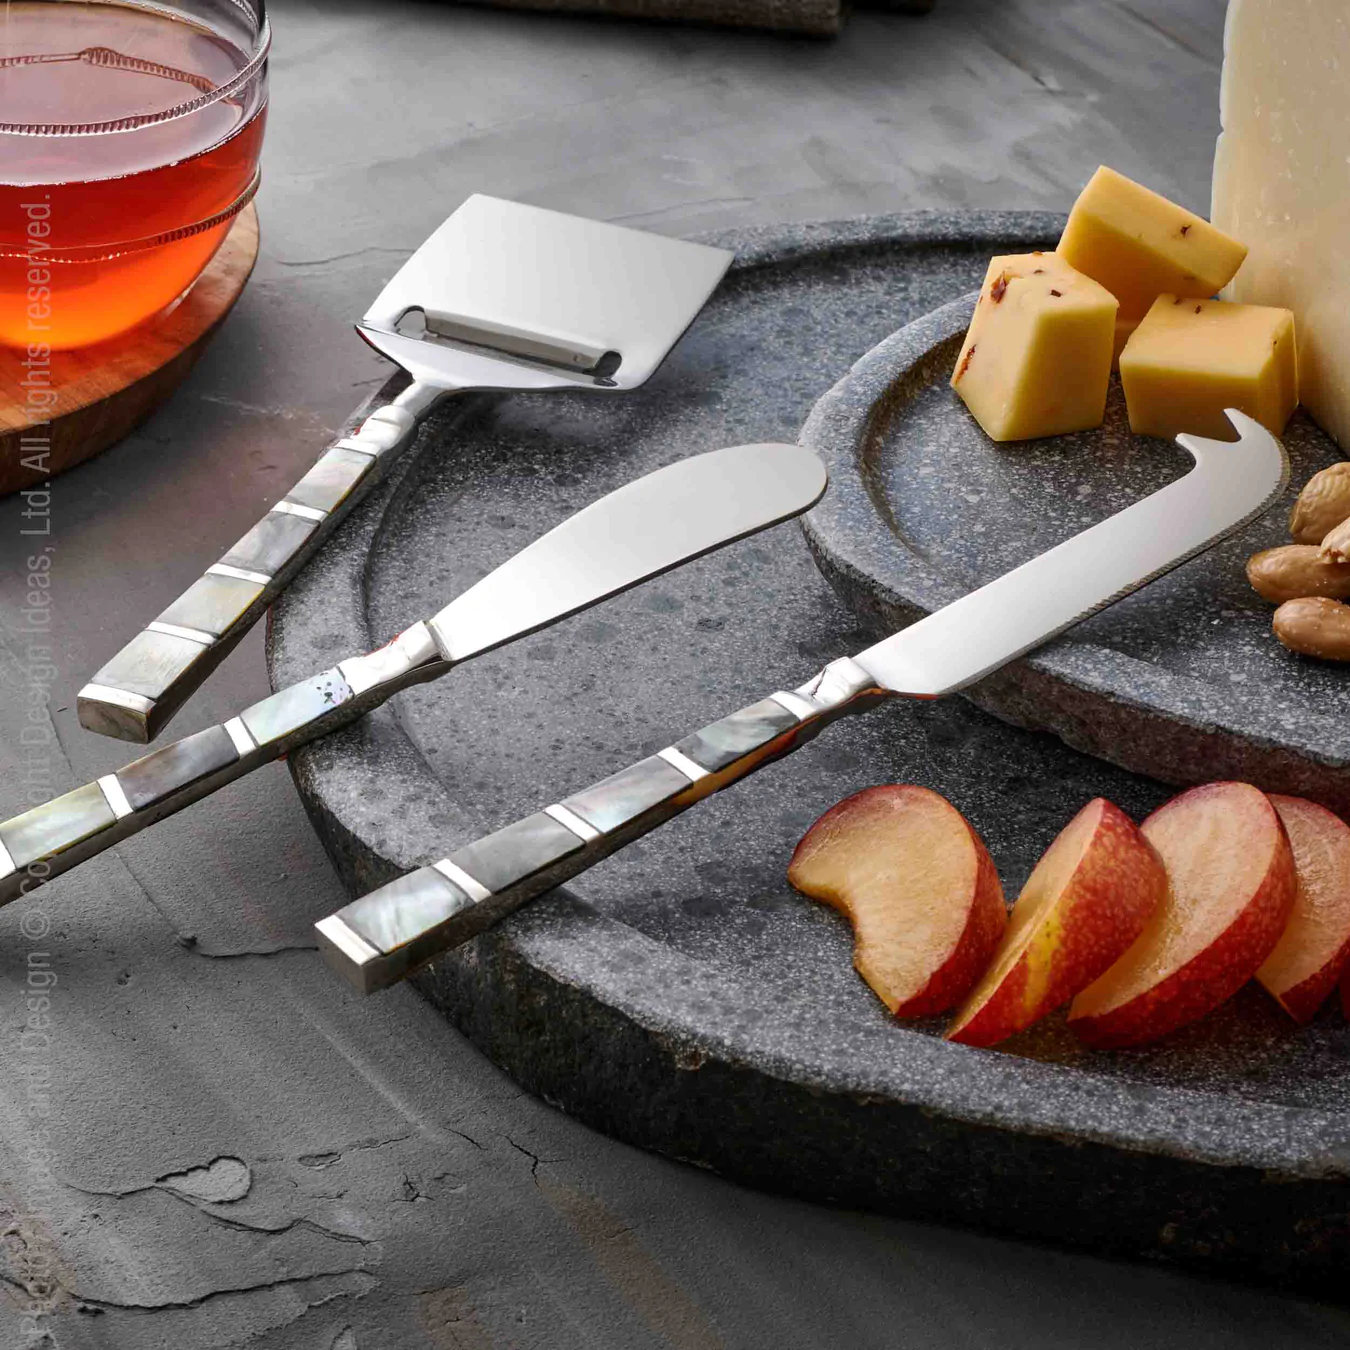 Abalon™ cheese knives